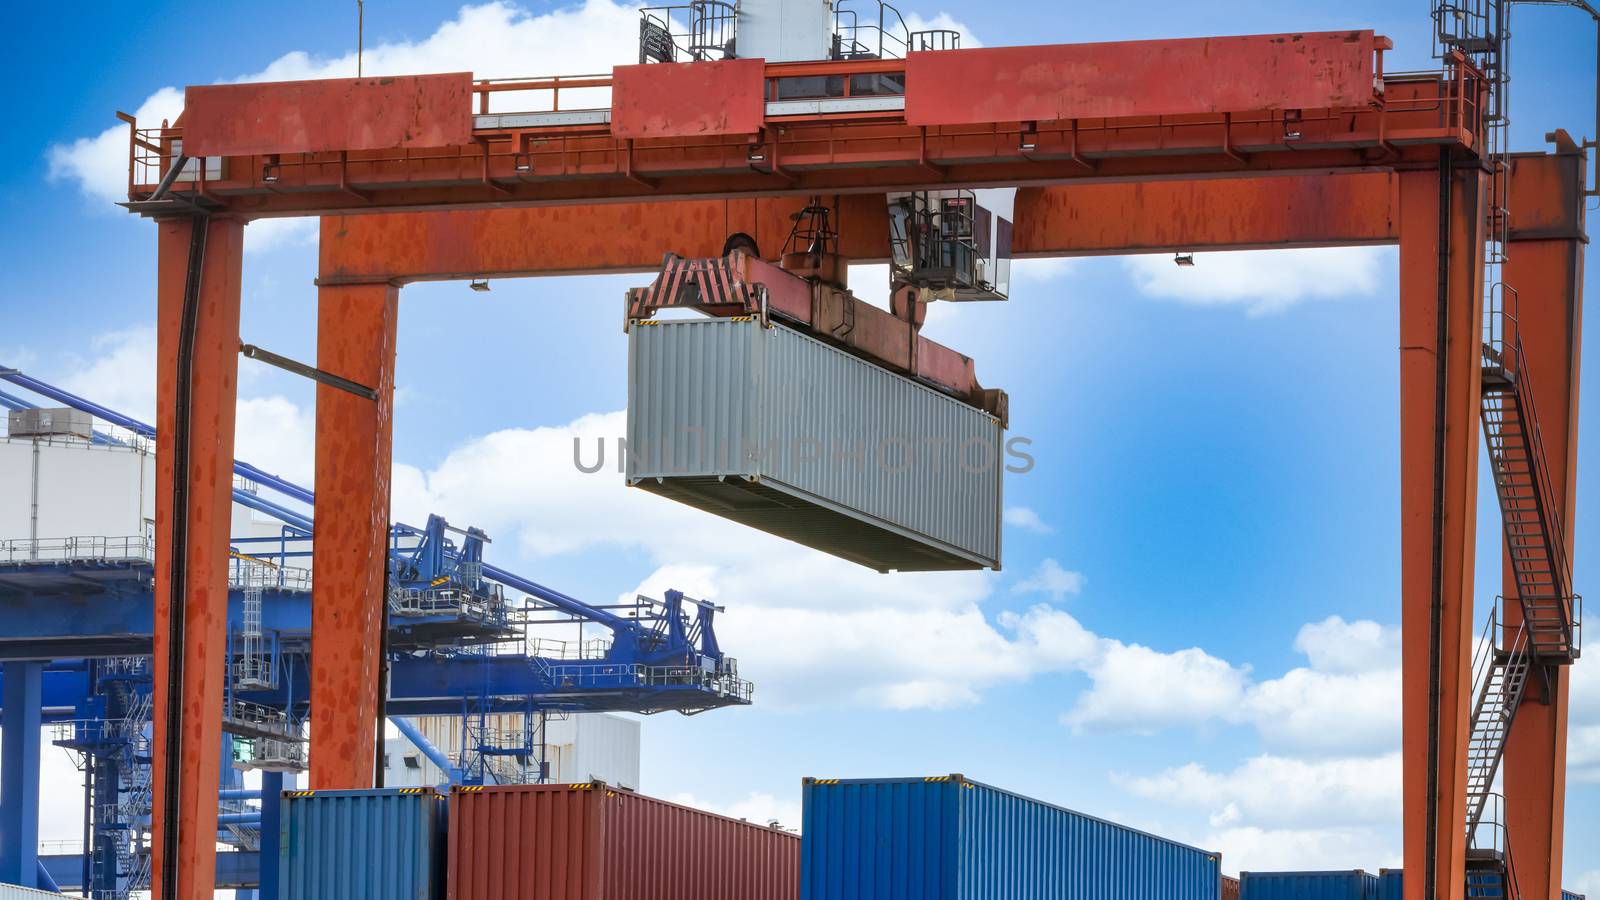 Harbor cargo cranes shipping port equipment, Industrial port cra by AvigatoR